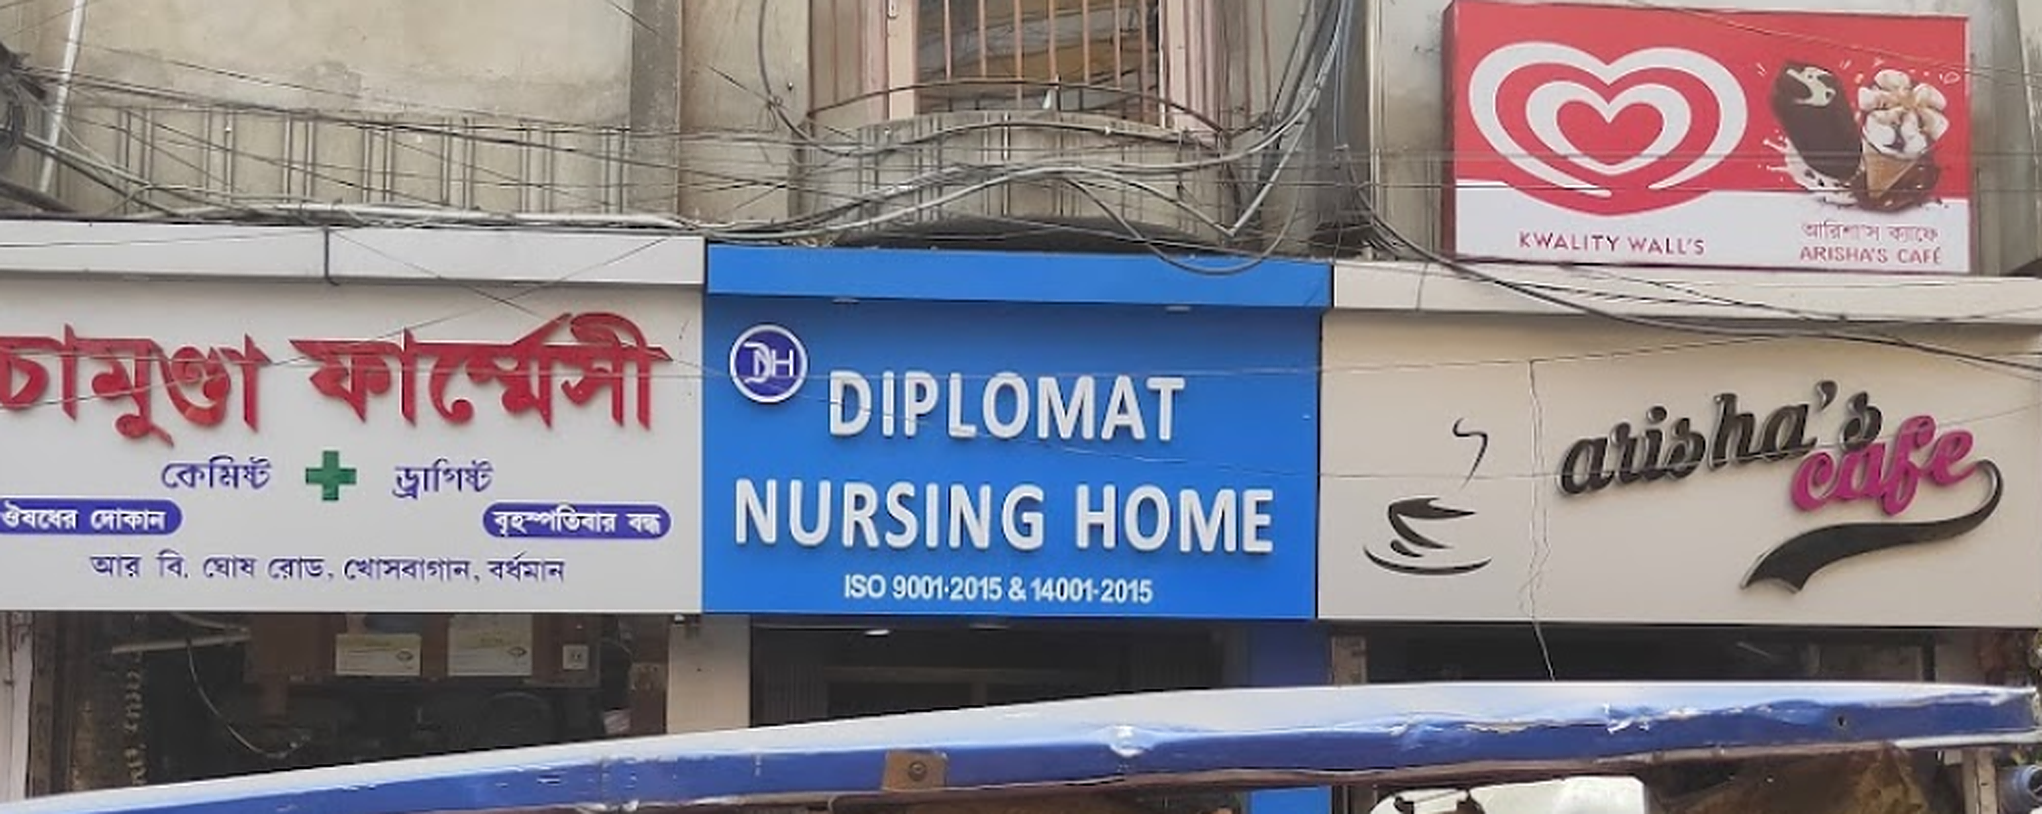 Diplomat Nursing Home